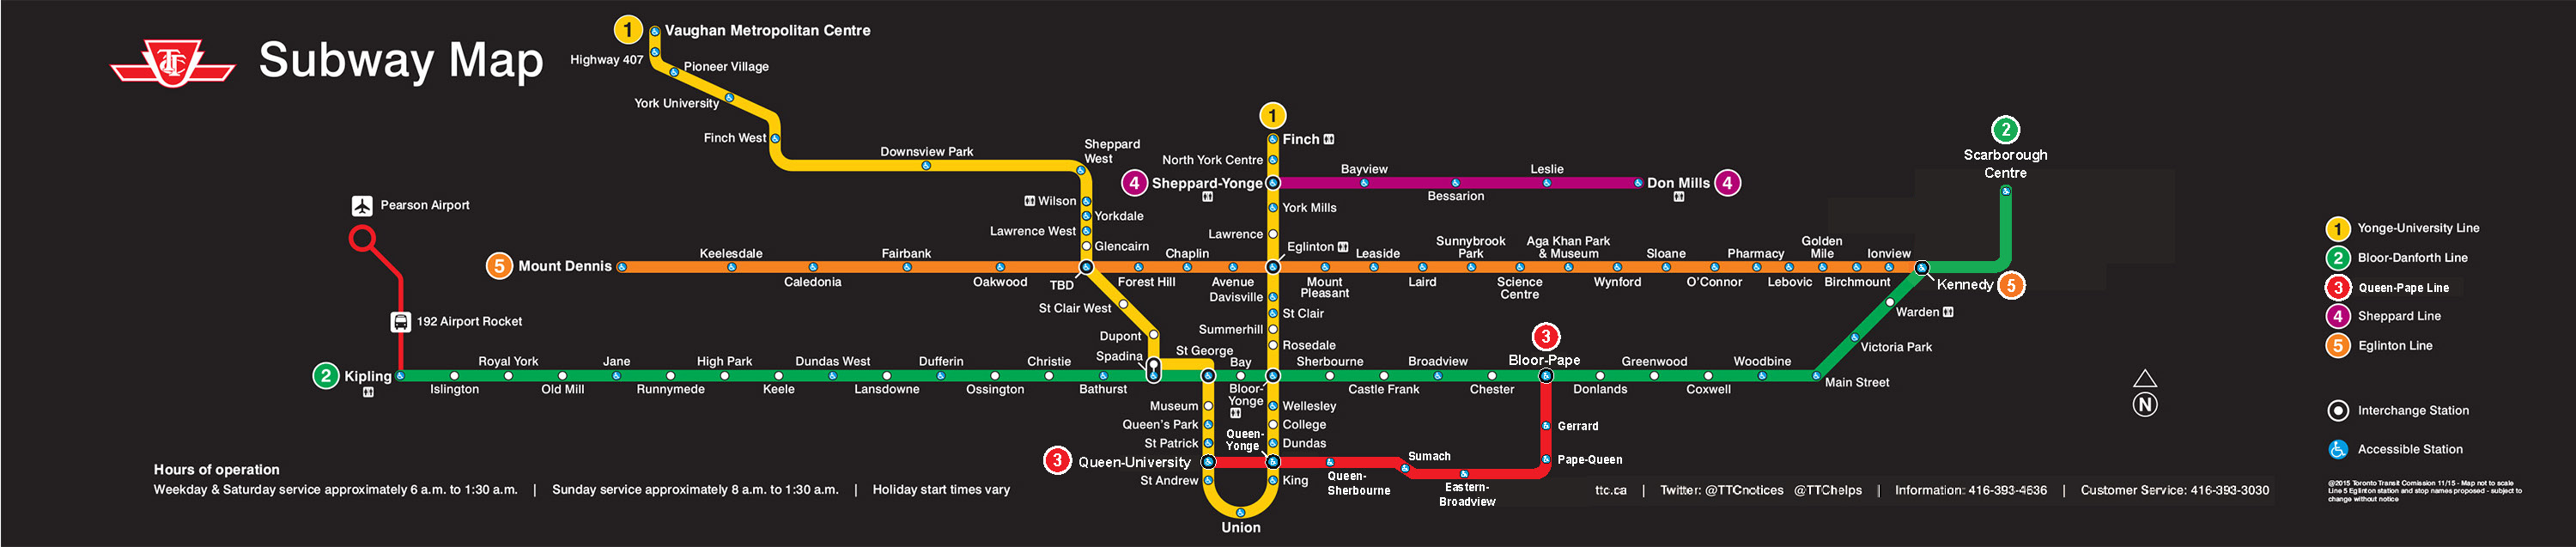 future subway mapv2.jpg